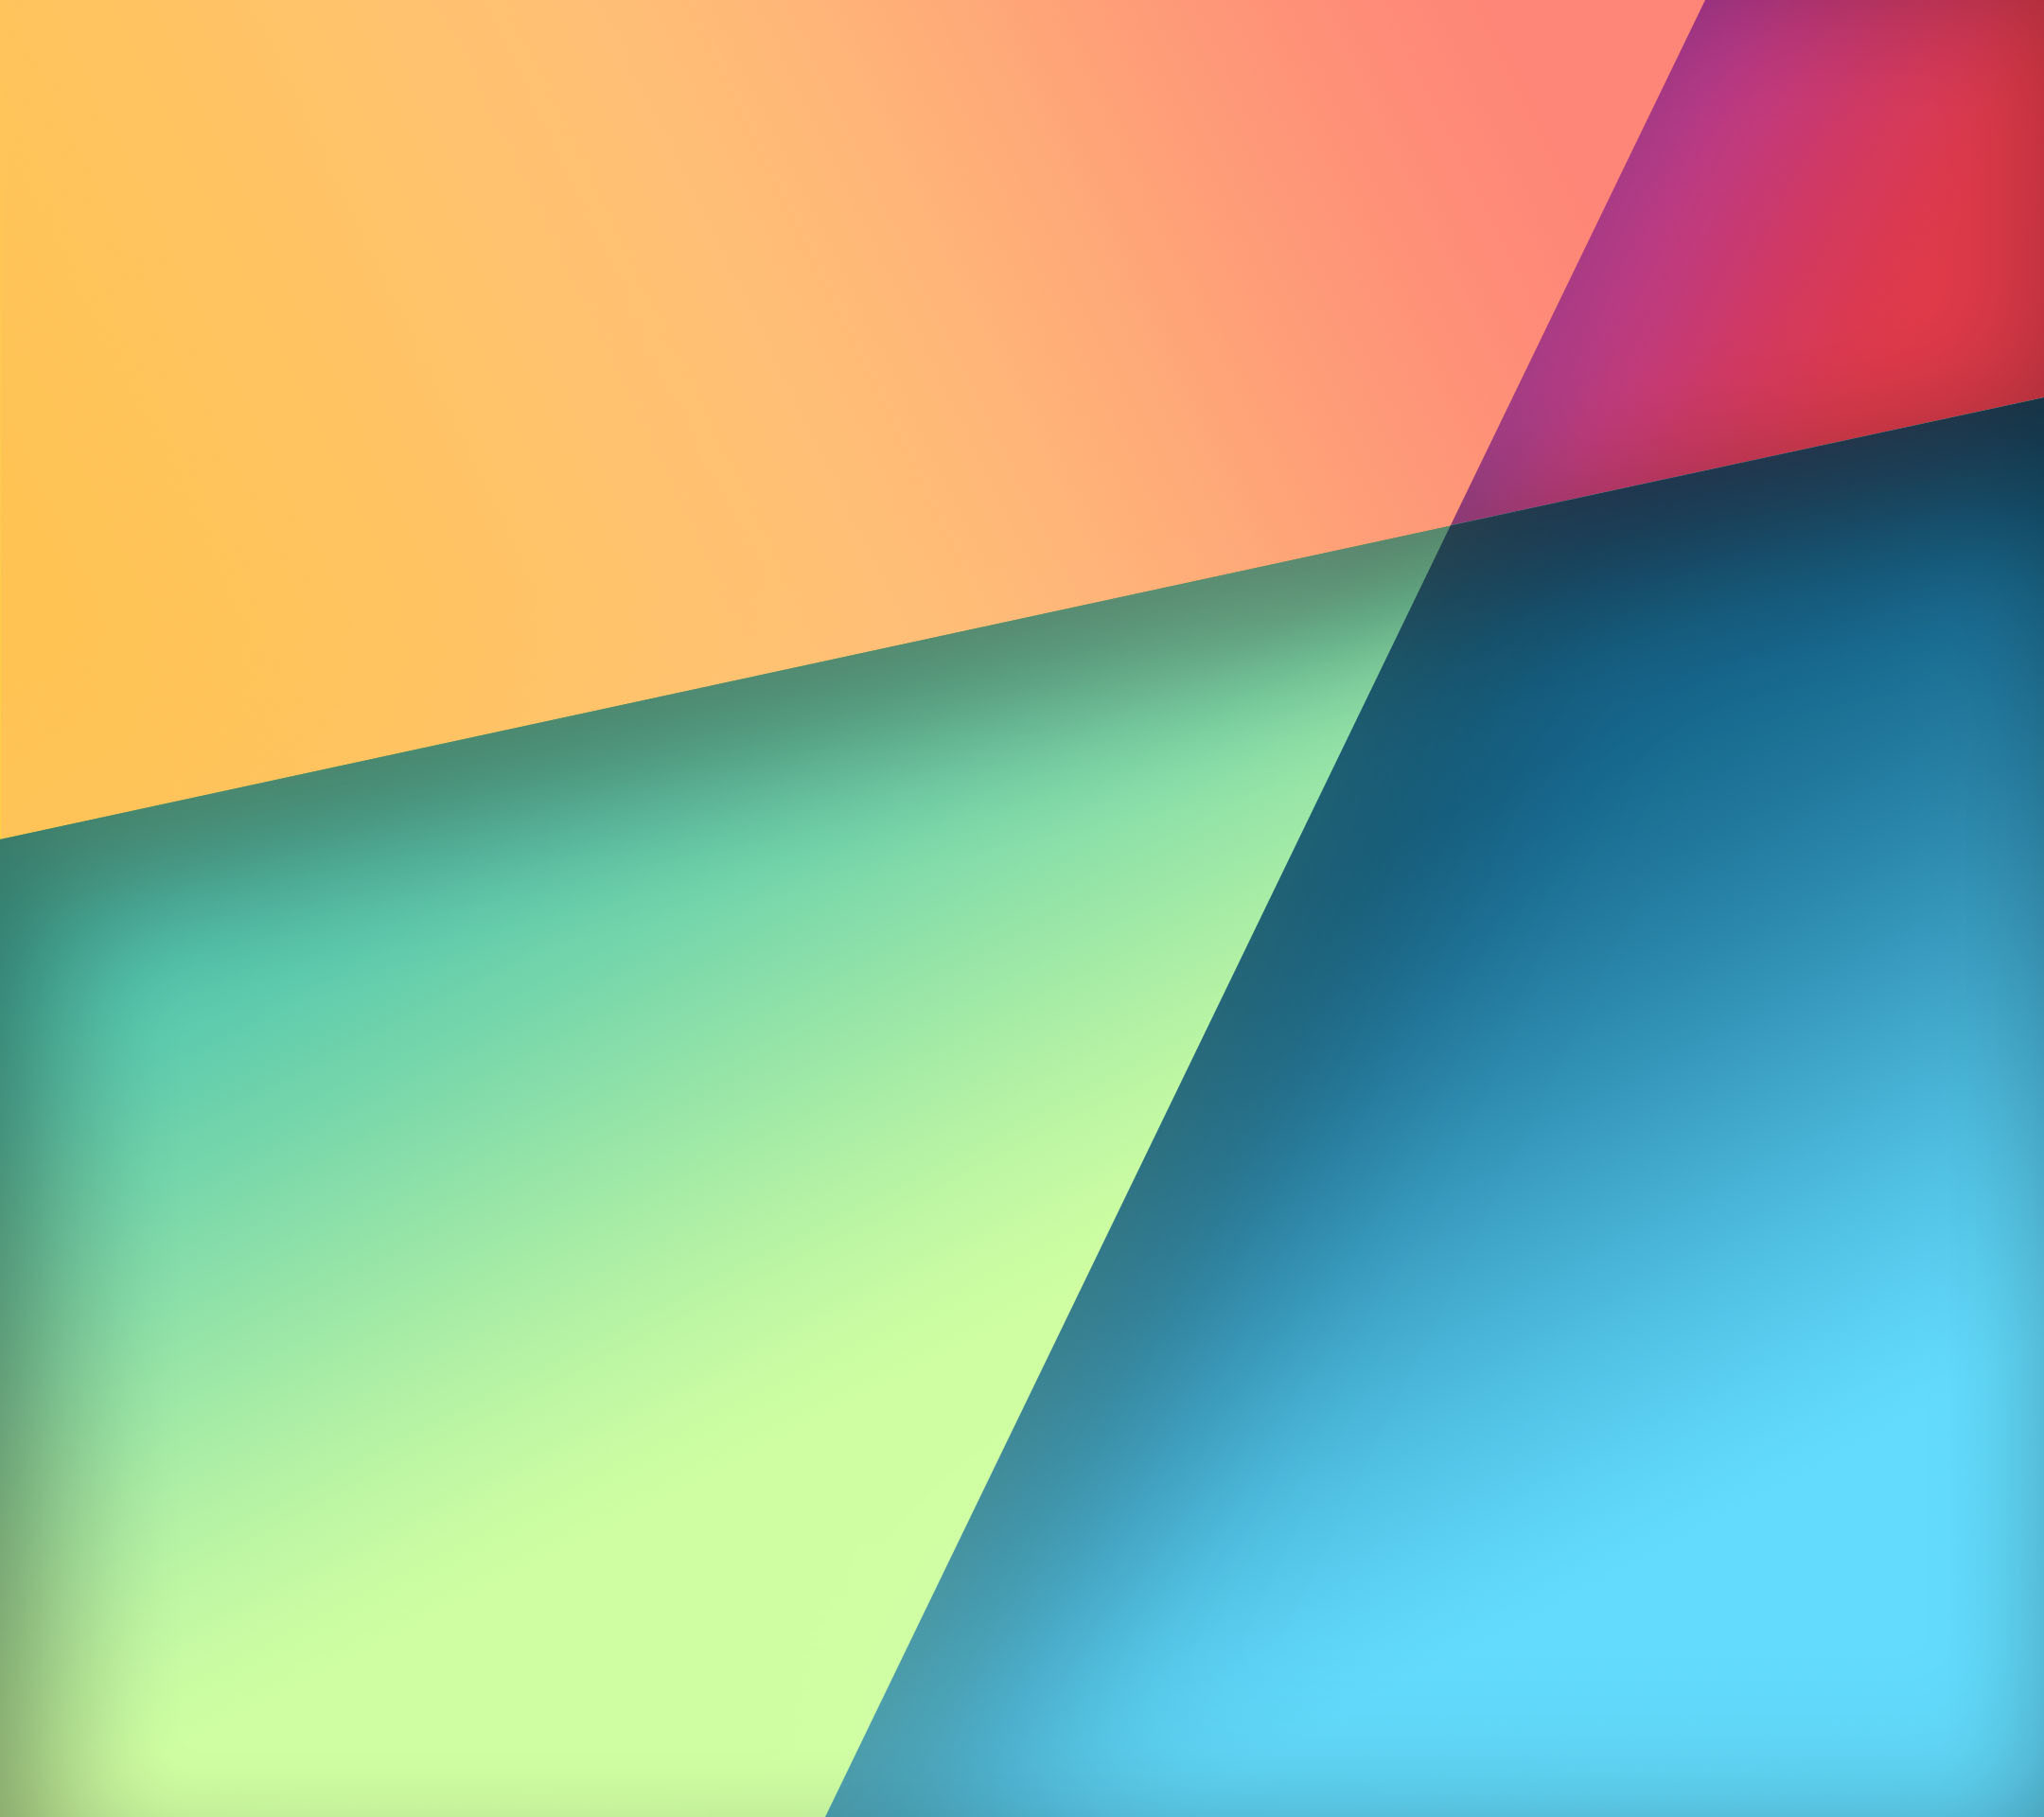 2160x1920 Nexus 7 Stock Wallpaper in Google Play Colors by R3CONN3R | FONDOS Y LÃNEAS  DECORATIVAS | Pinterest | Google play, Wallpaper and Google